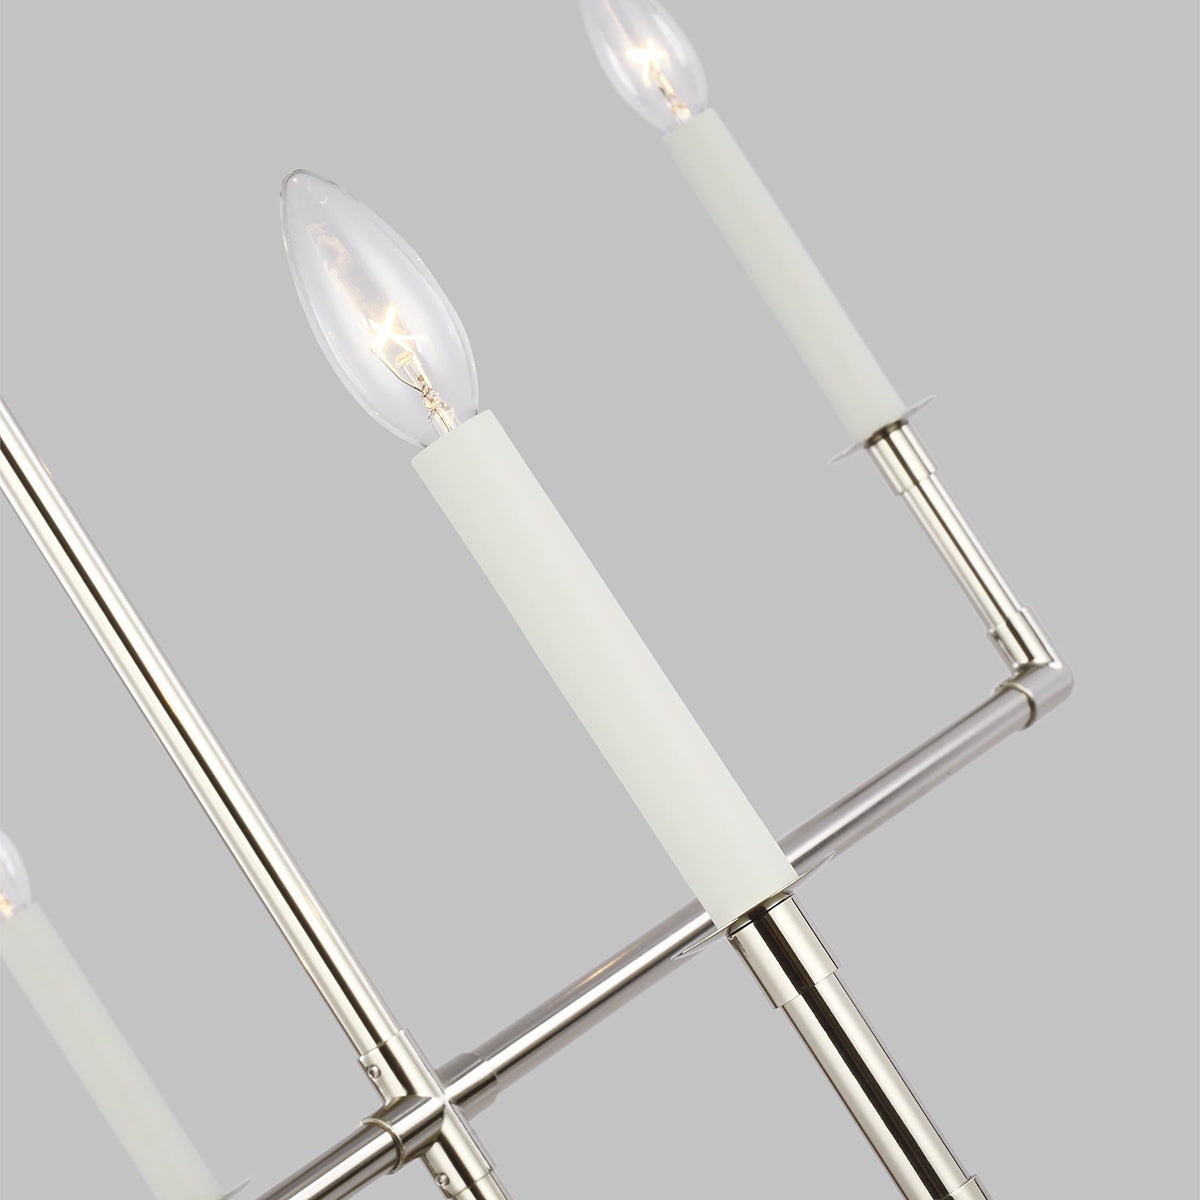 Bayview 6L medium chandelier  - CC1346PN